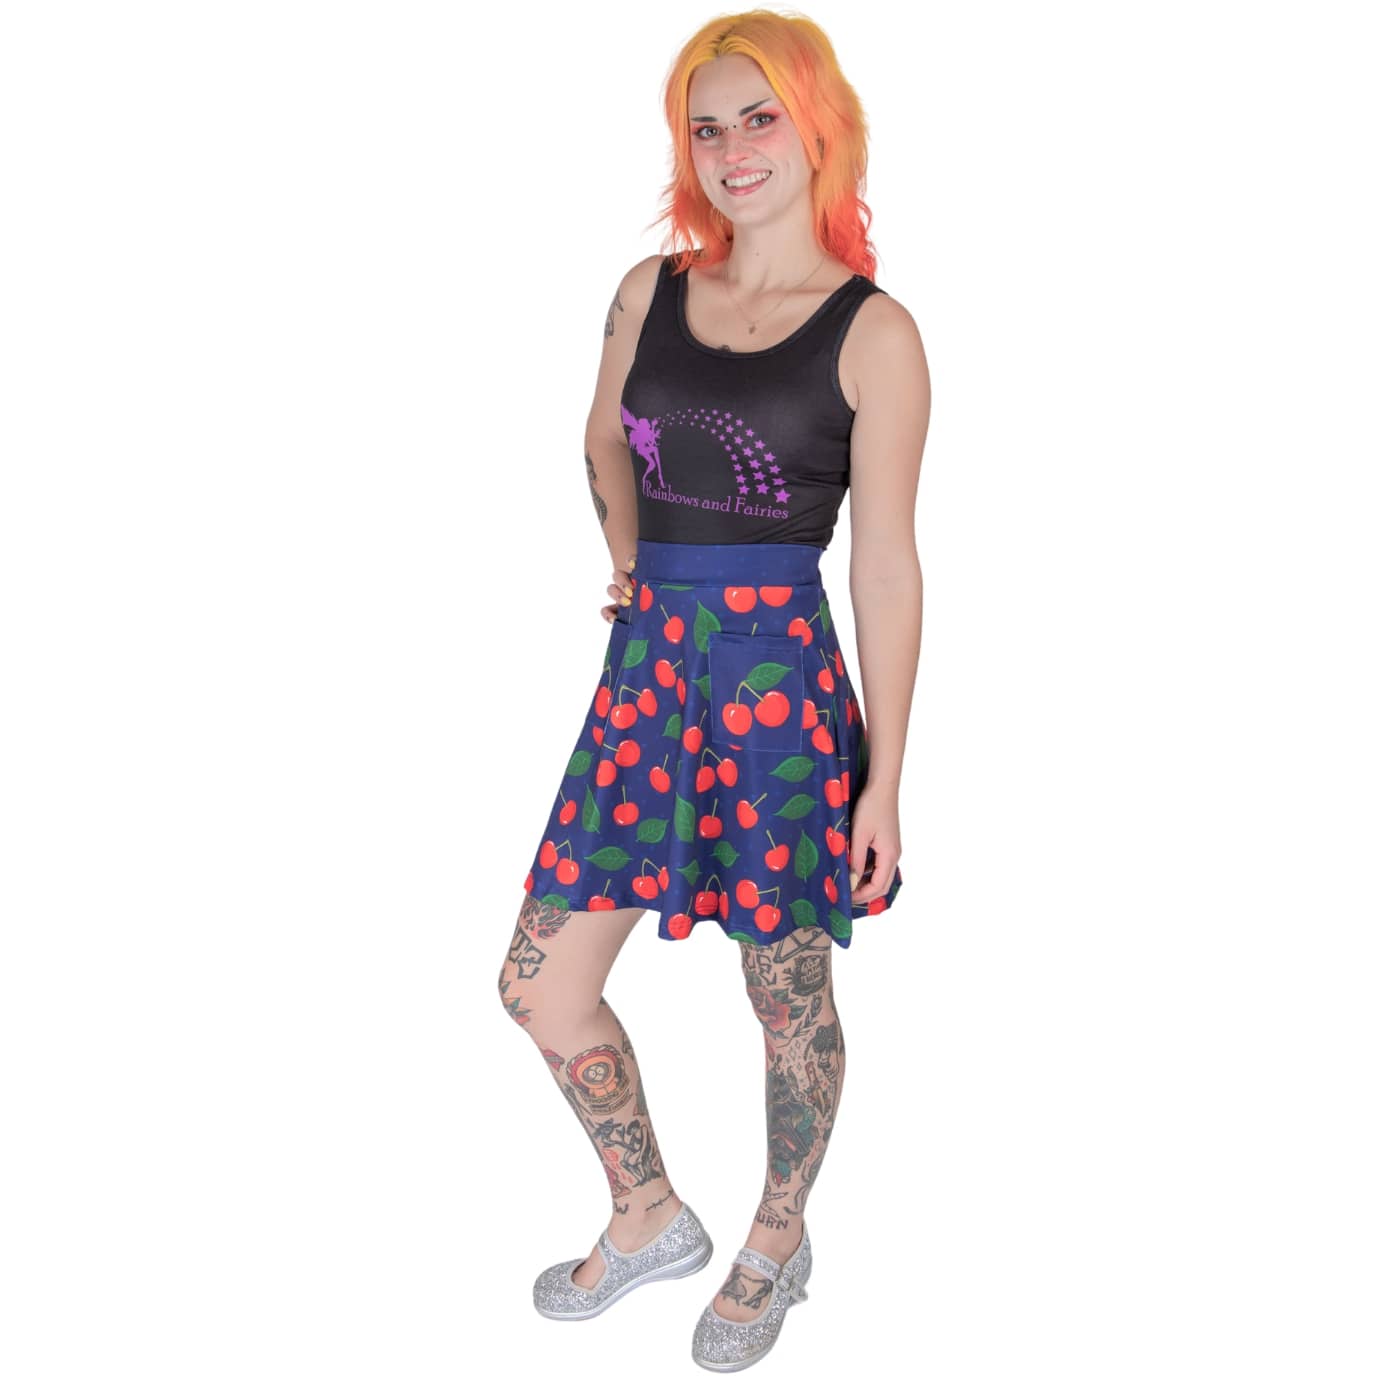 Cherry Short Skirt by RainbowsAndFairies.com.au (Cherries - Cherry Print - Rockabilly - Aline Skirt - Skirt With Pockets - Kitsch - Vintage Inspired) - SKU: CL_SHORT_CHERR_ORG - Pic-04